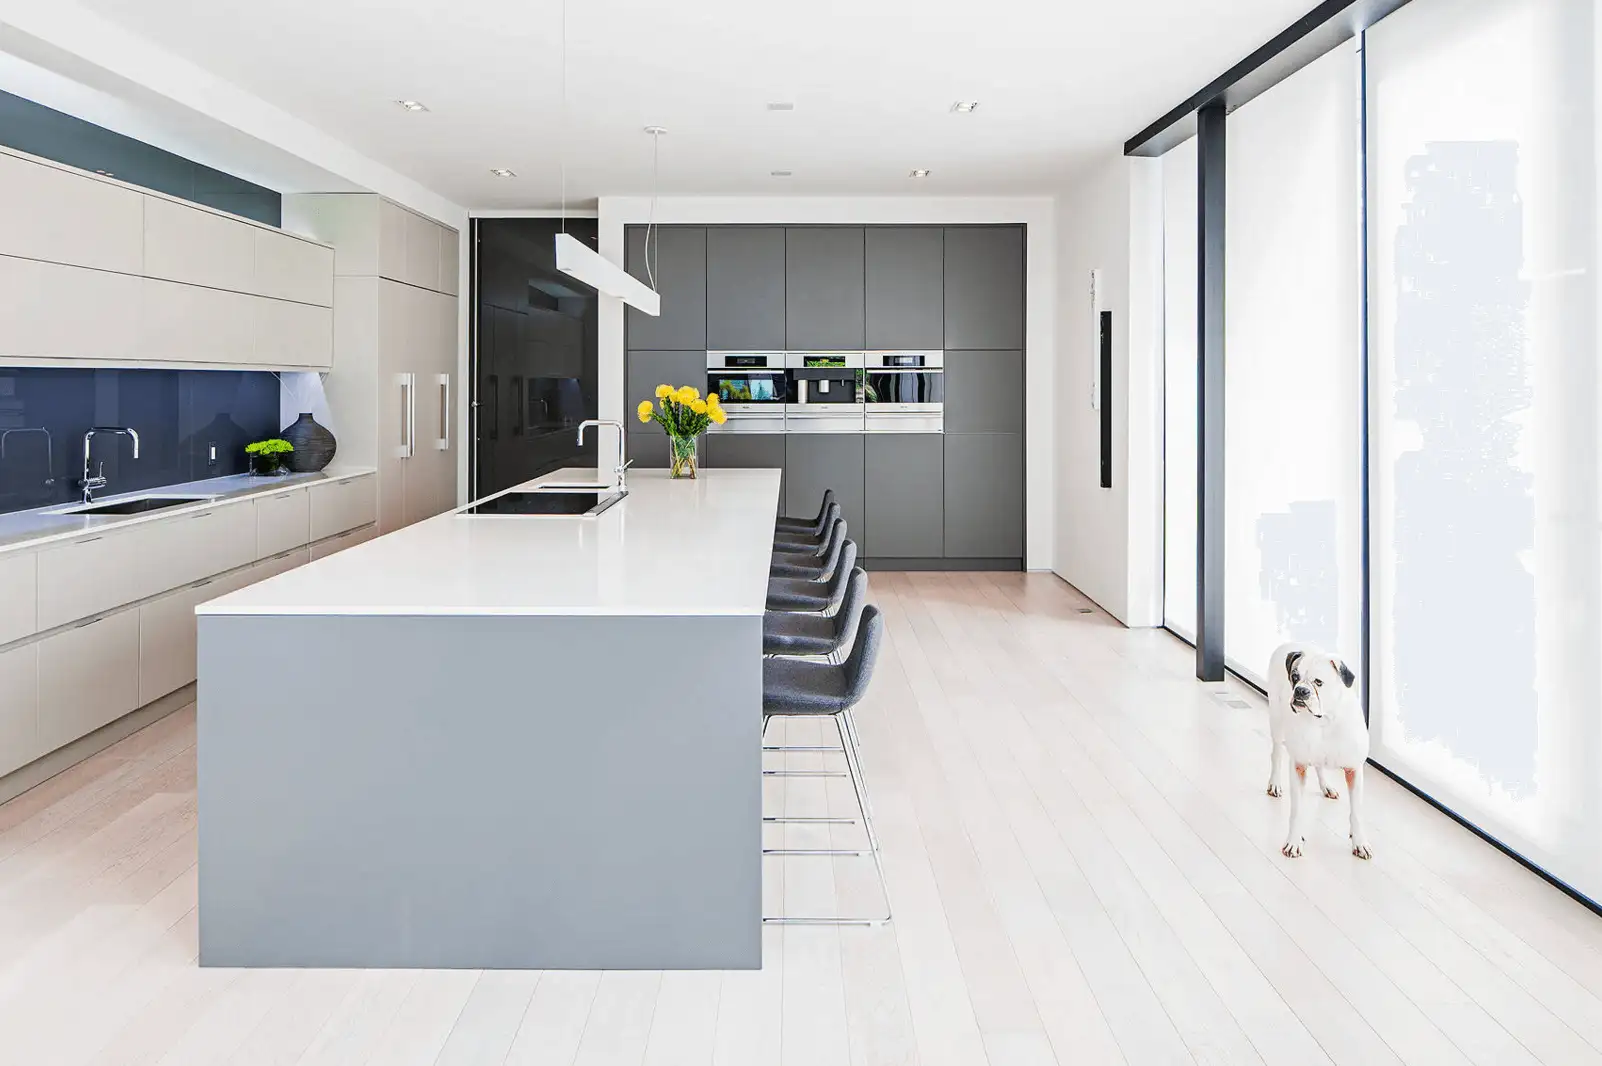 How to create a minimalist kitchen